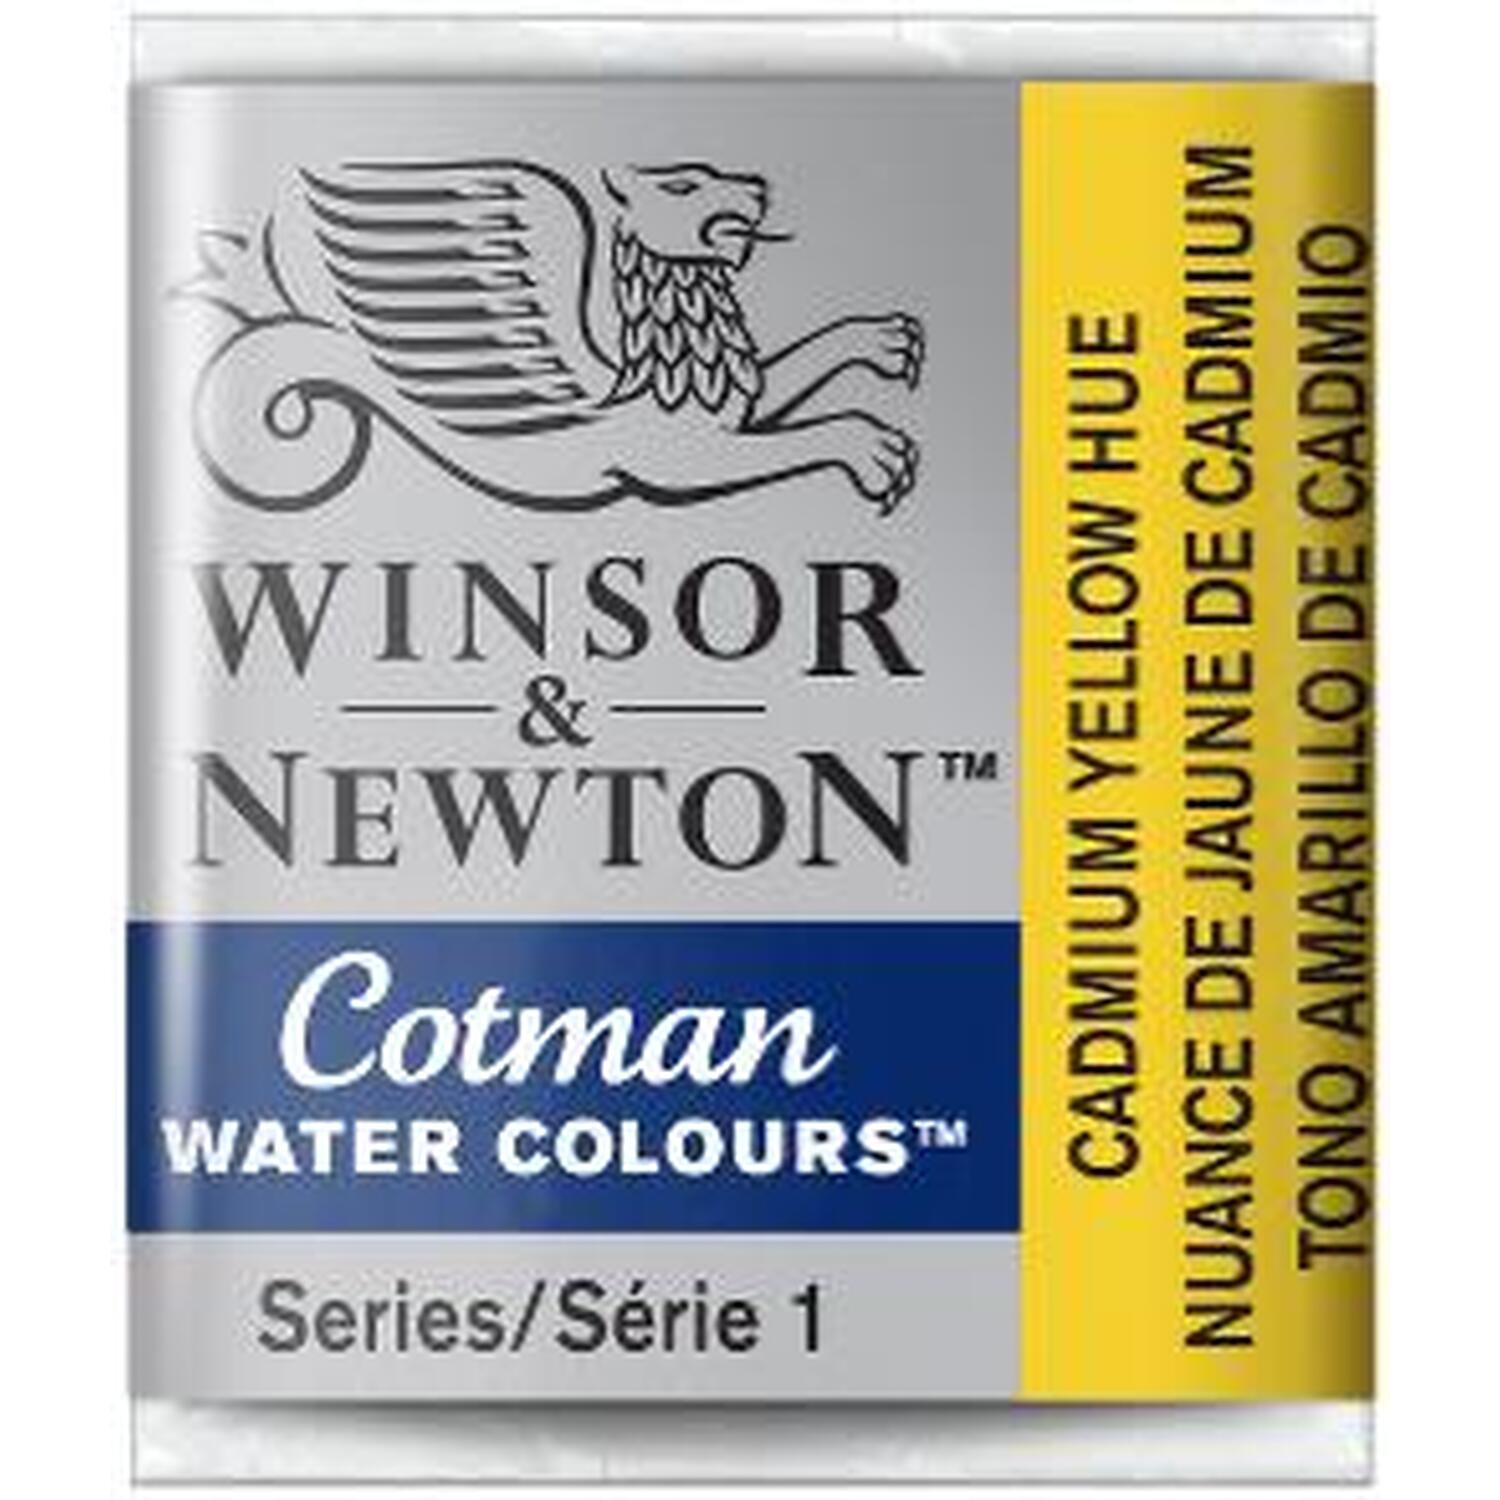 Winsor and Newton Cotman Watercolour Half Pan Paint - Cadmium Yellow Hue Image